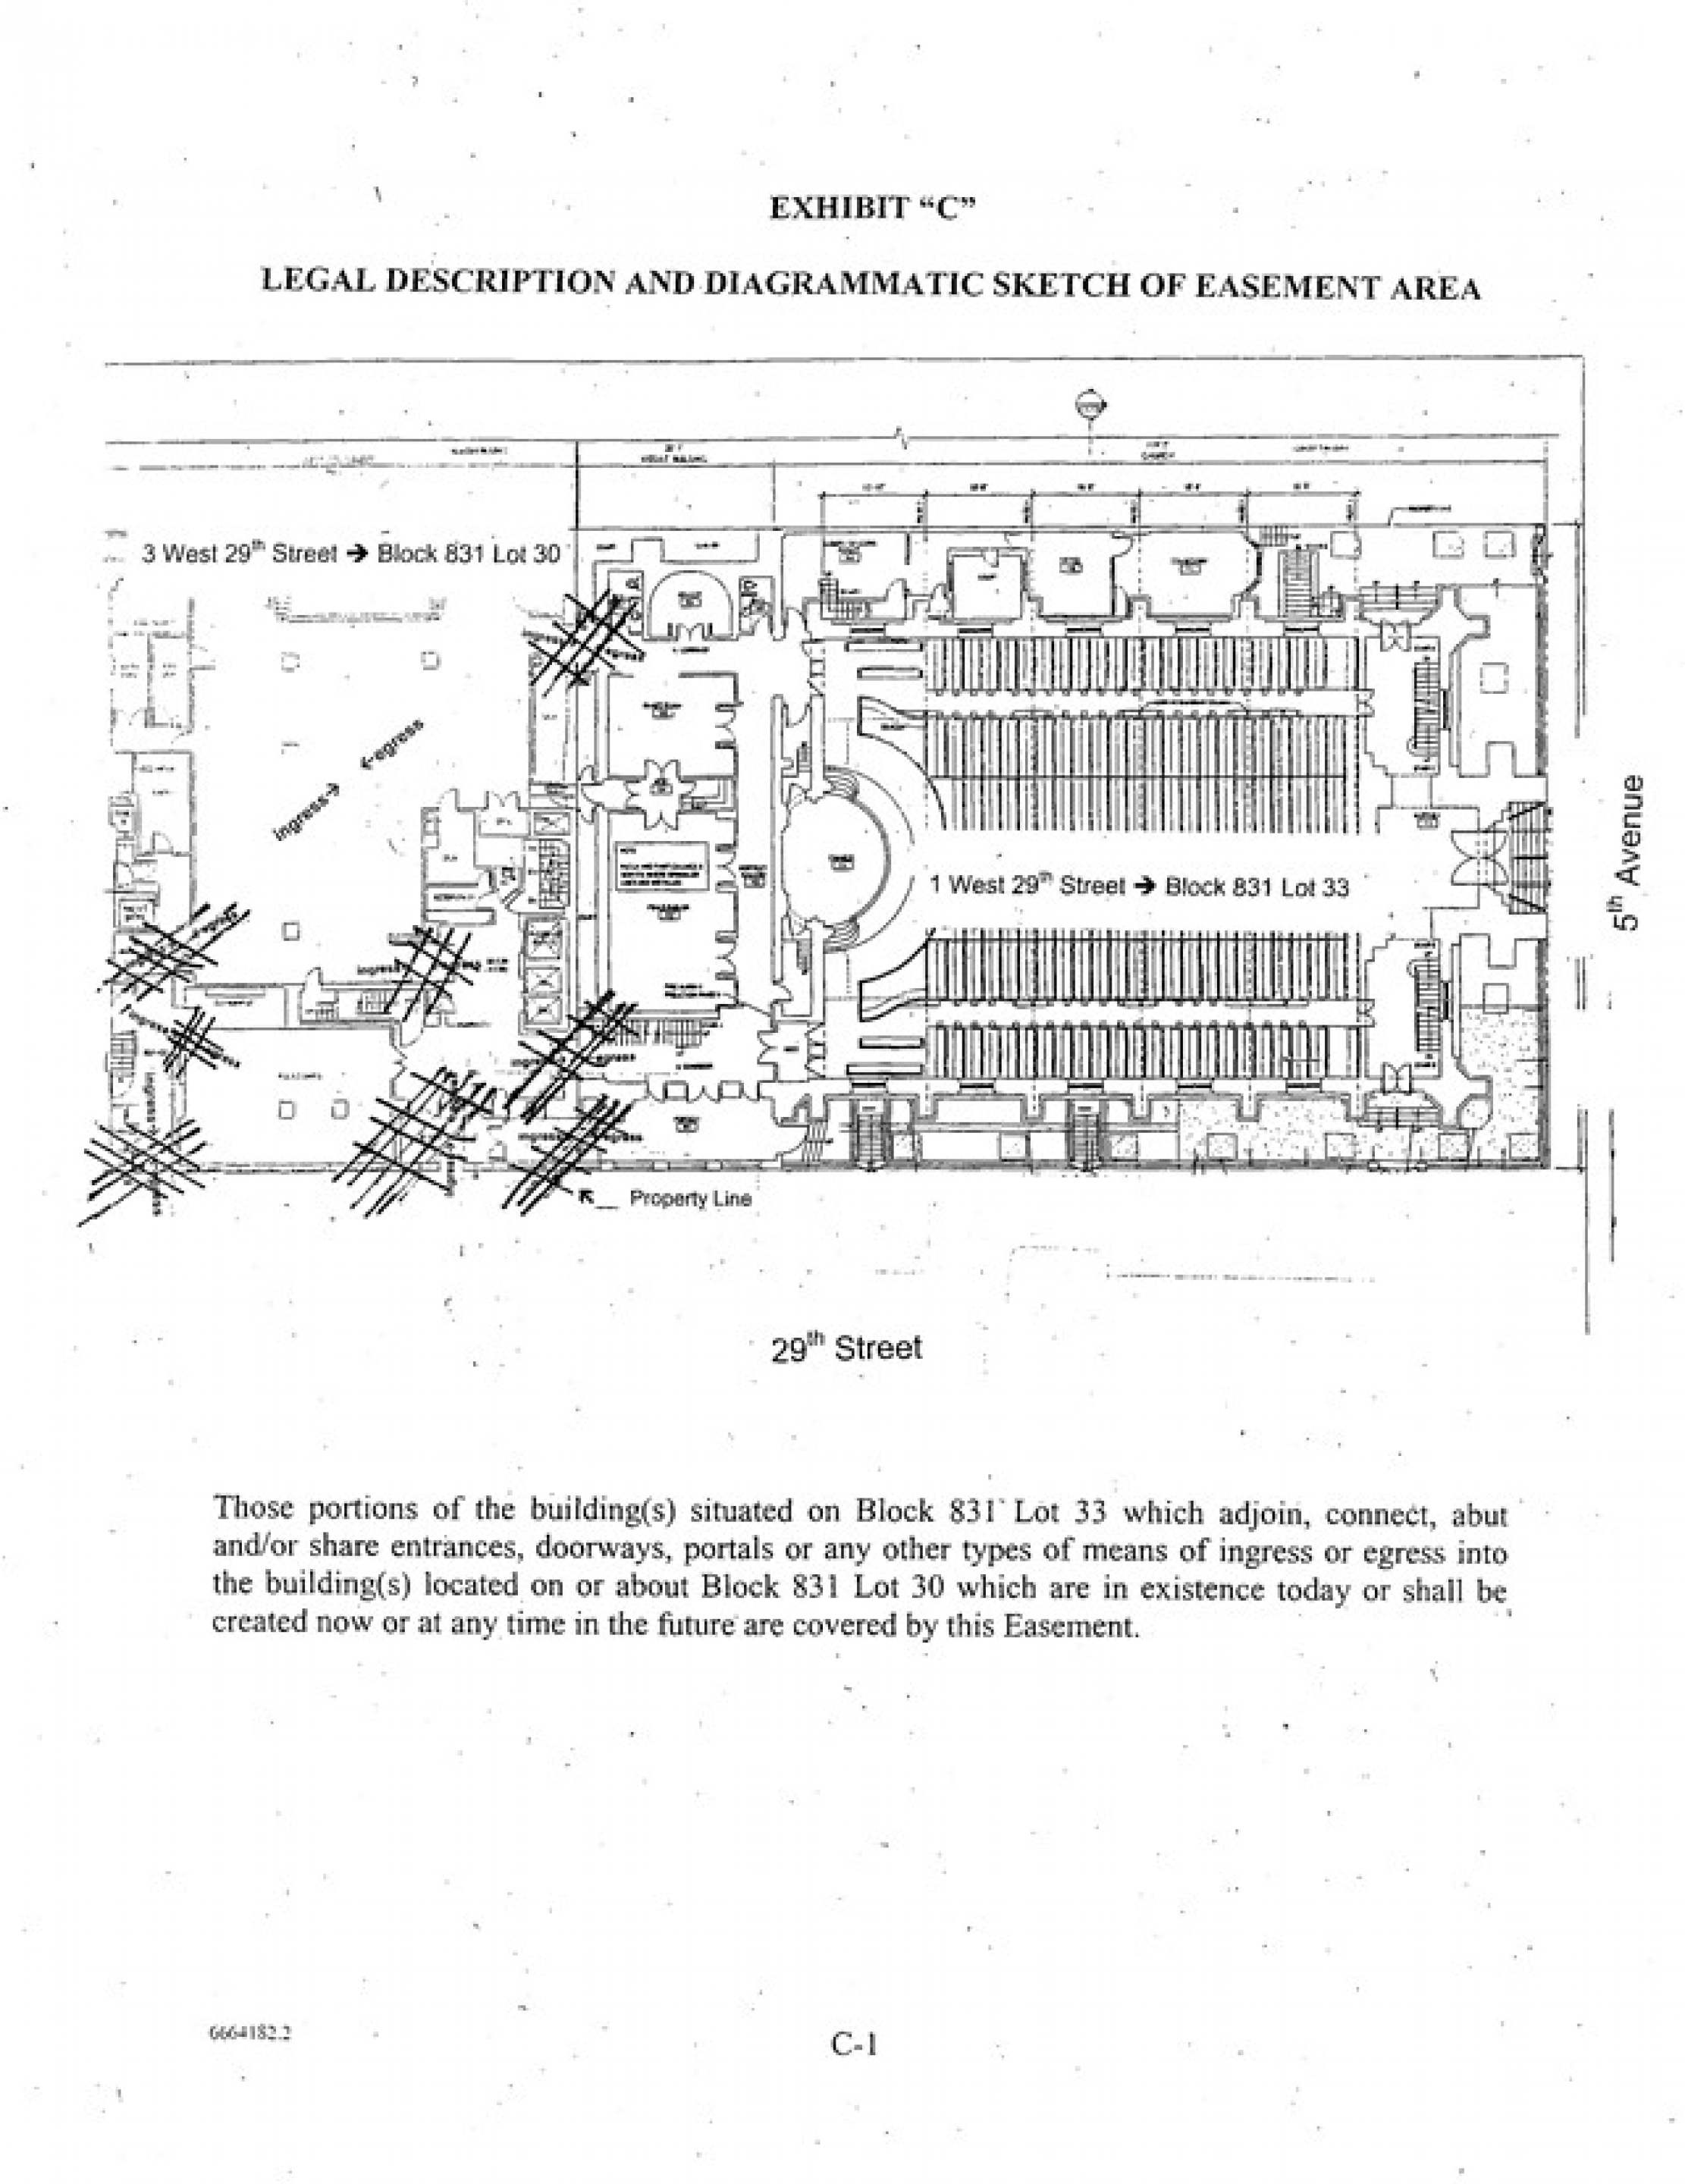 Exhibit "C" - Legal Description and Diagrammatic Sketch of Easement Area